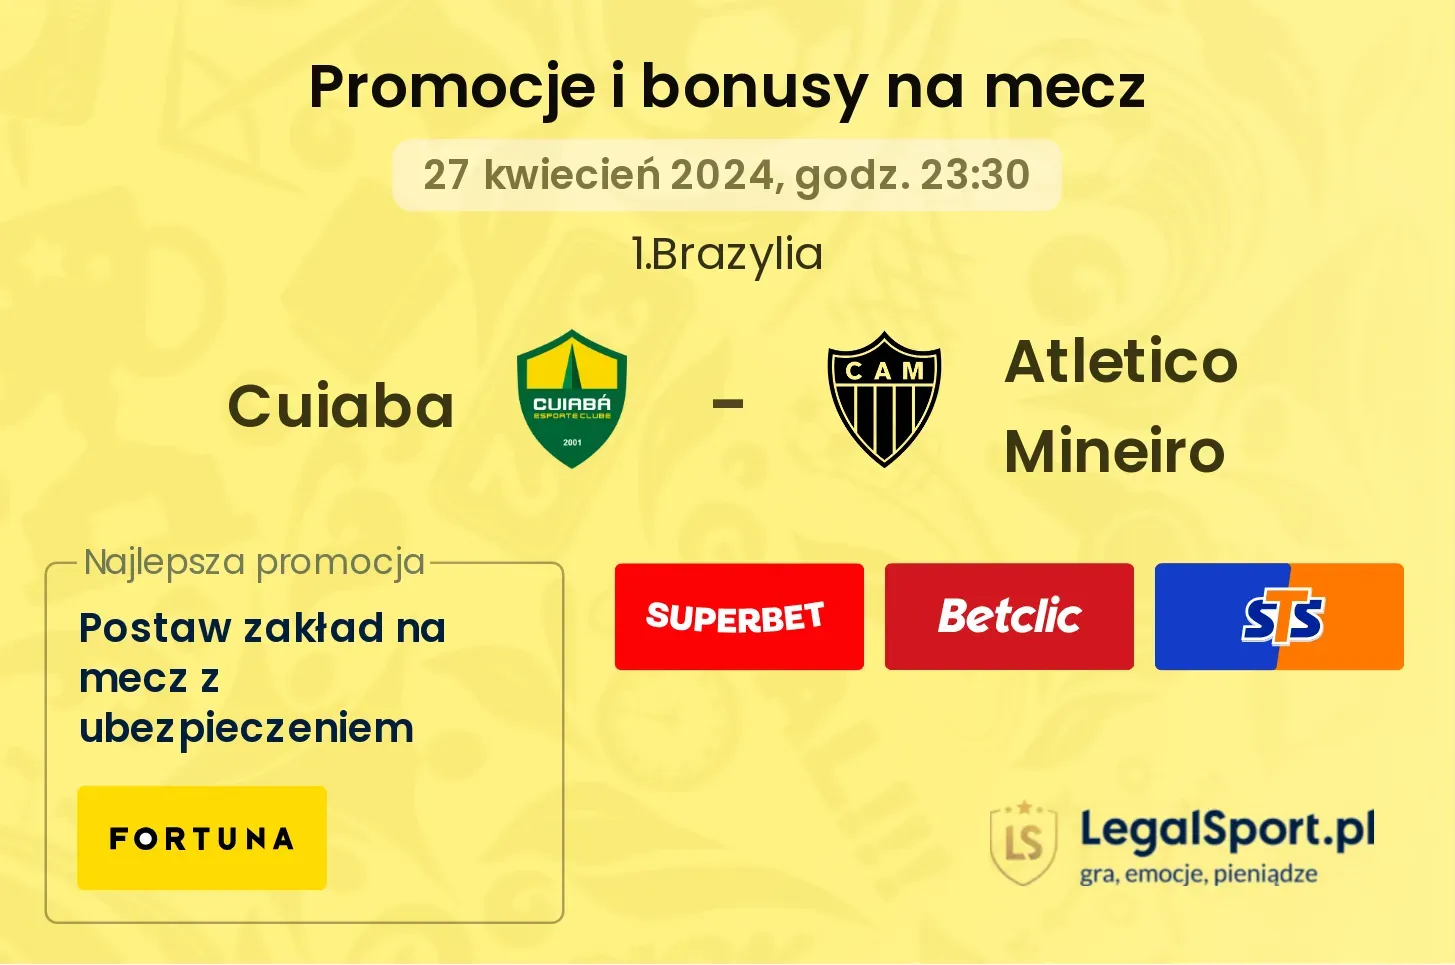 Cuiaba - Atletico Mineiro promocje bonusy na mecz